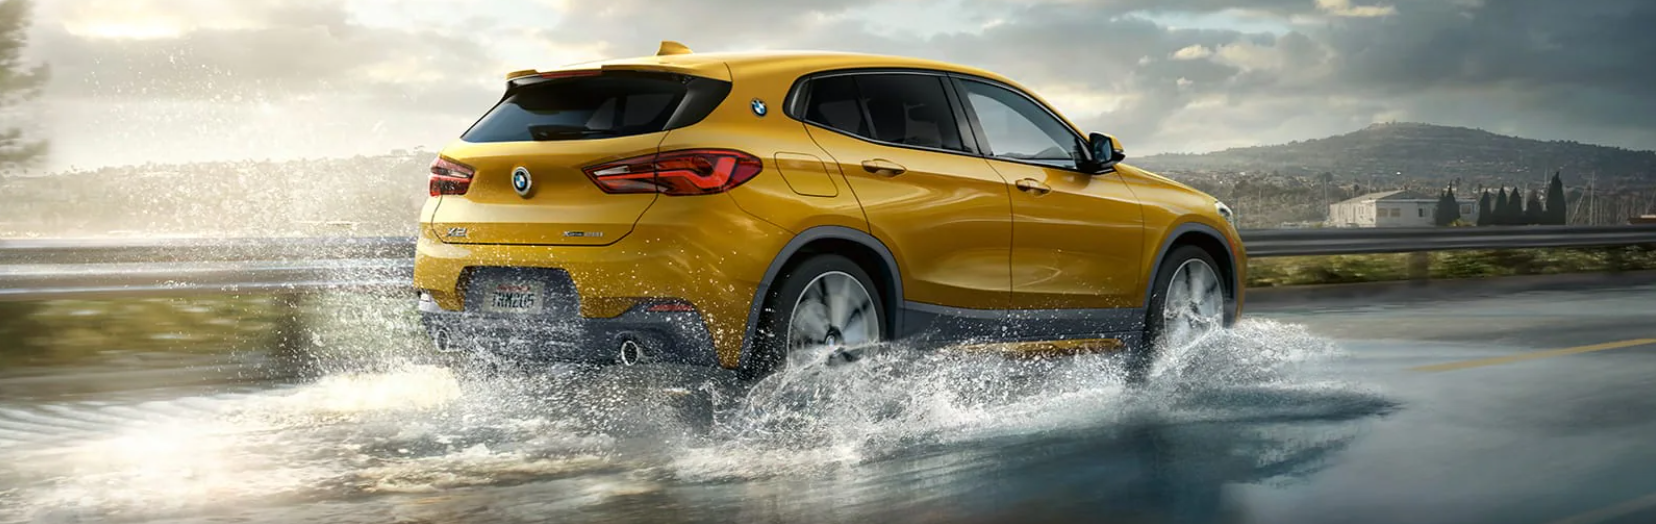 yellow BMW x2 driving through water